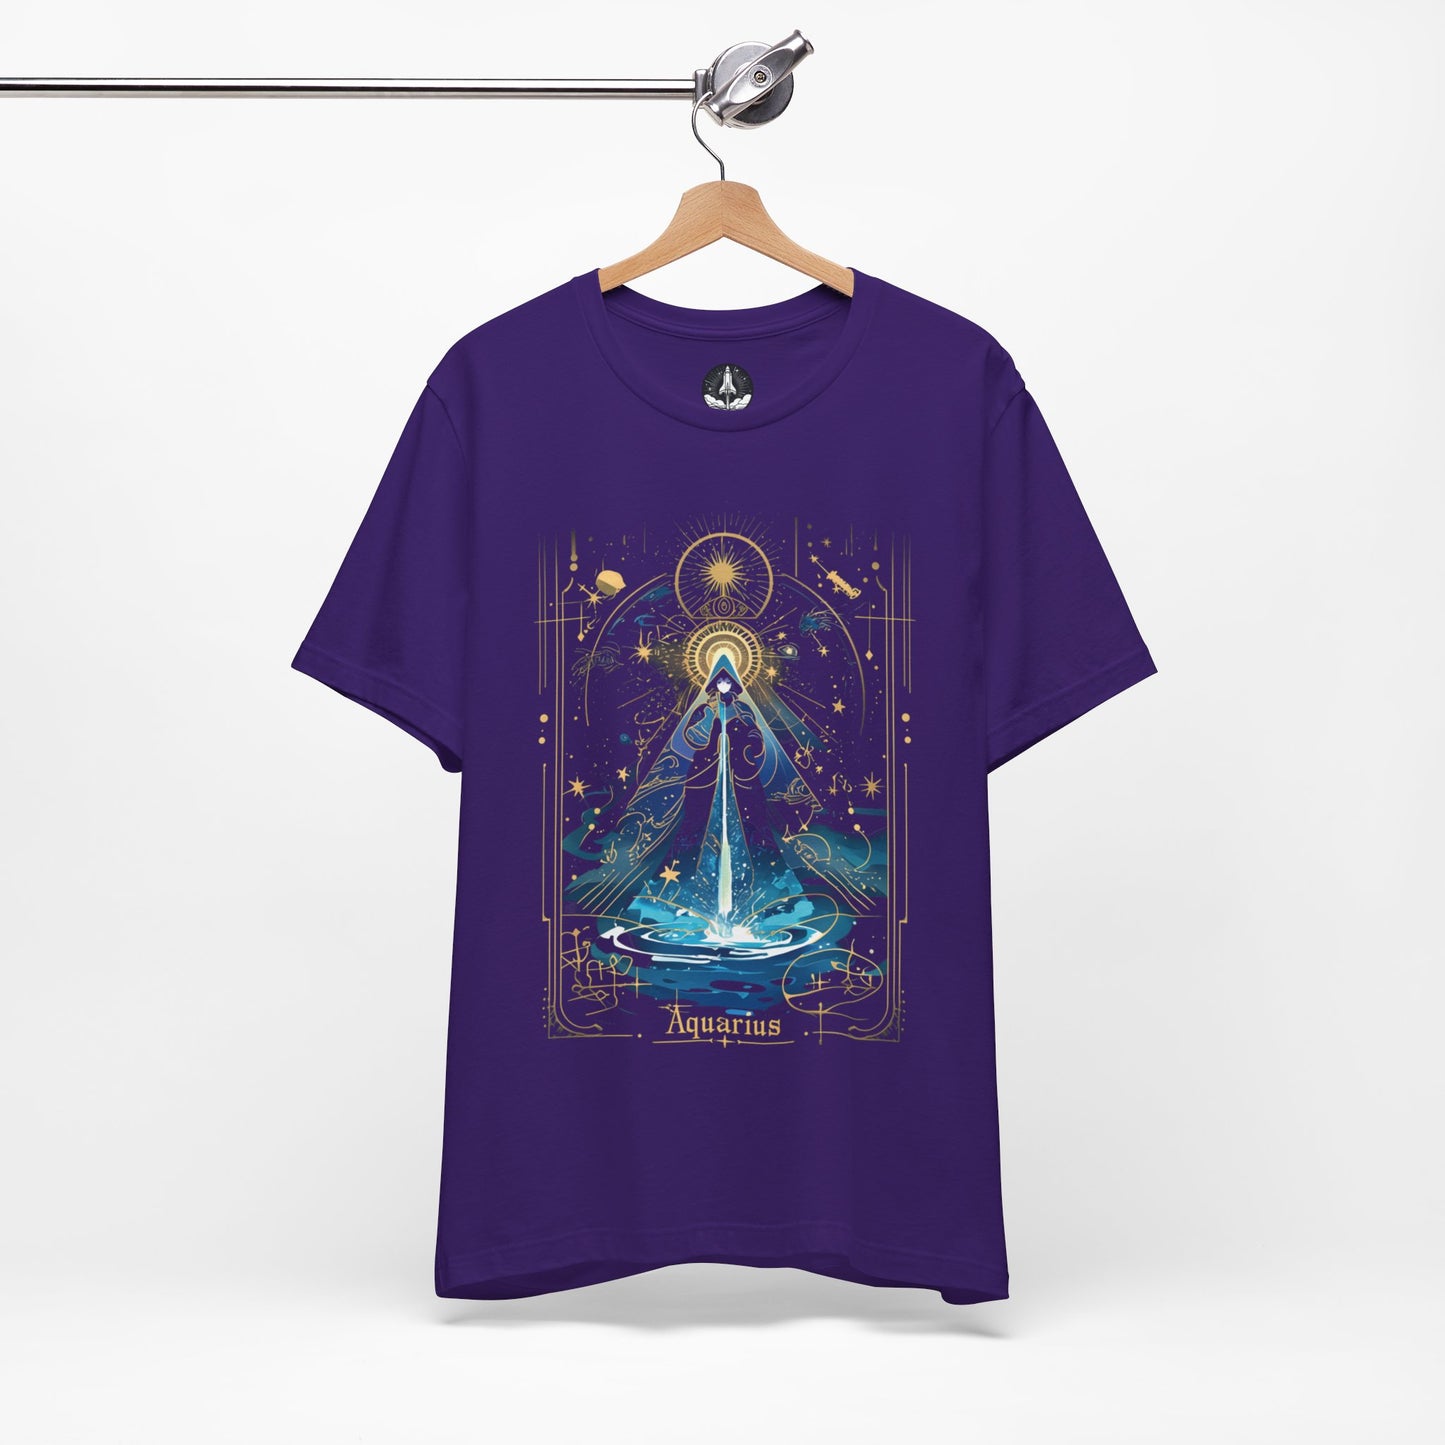 The Water Bearer: Aquarius Tarot Card T-Shirt